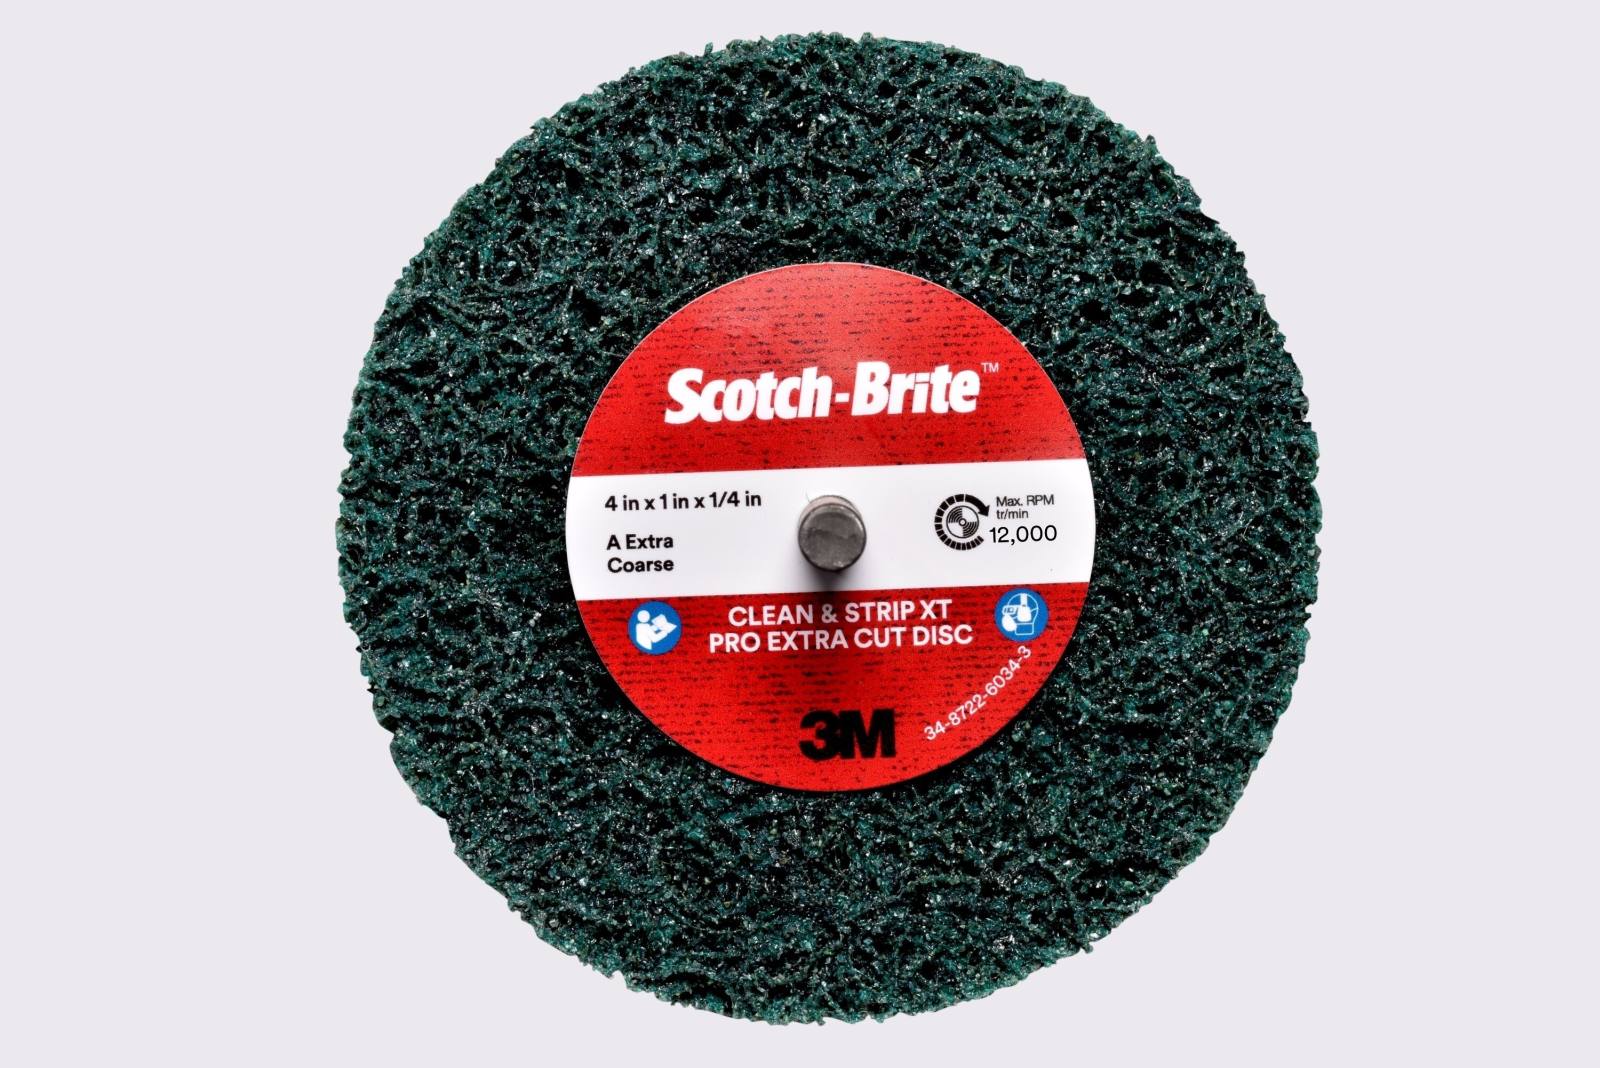 3M Scotch-Brite coarse cleaning disc XT-ZS Pro Extra Cut, 100 mm, 13 mm, 6 mm, A, extra coarse